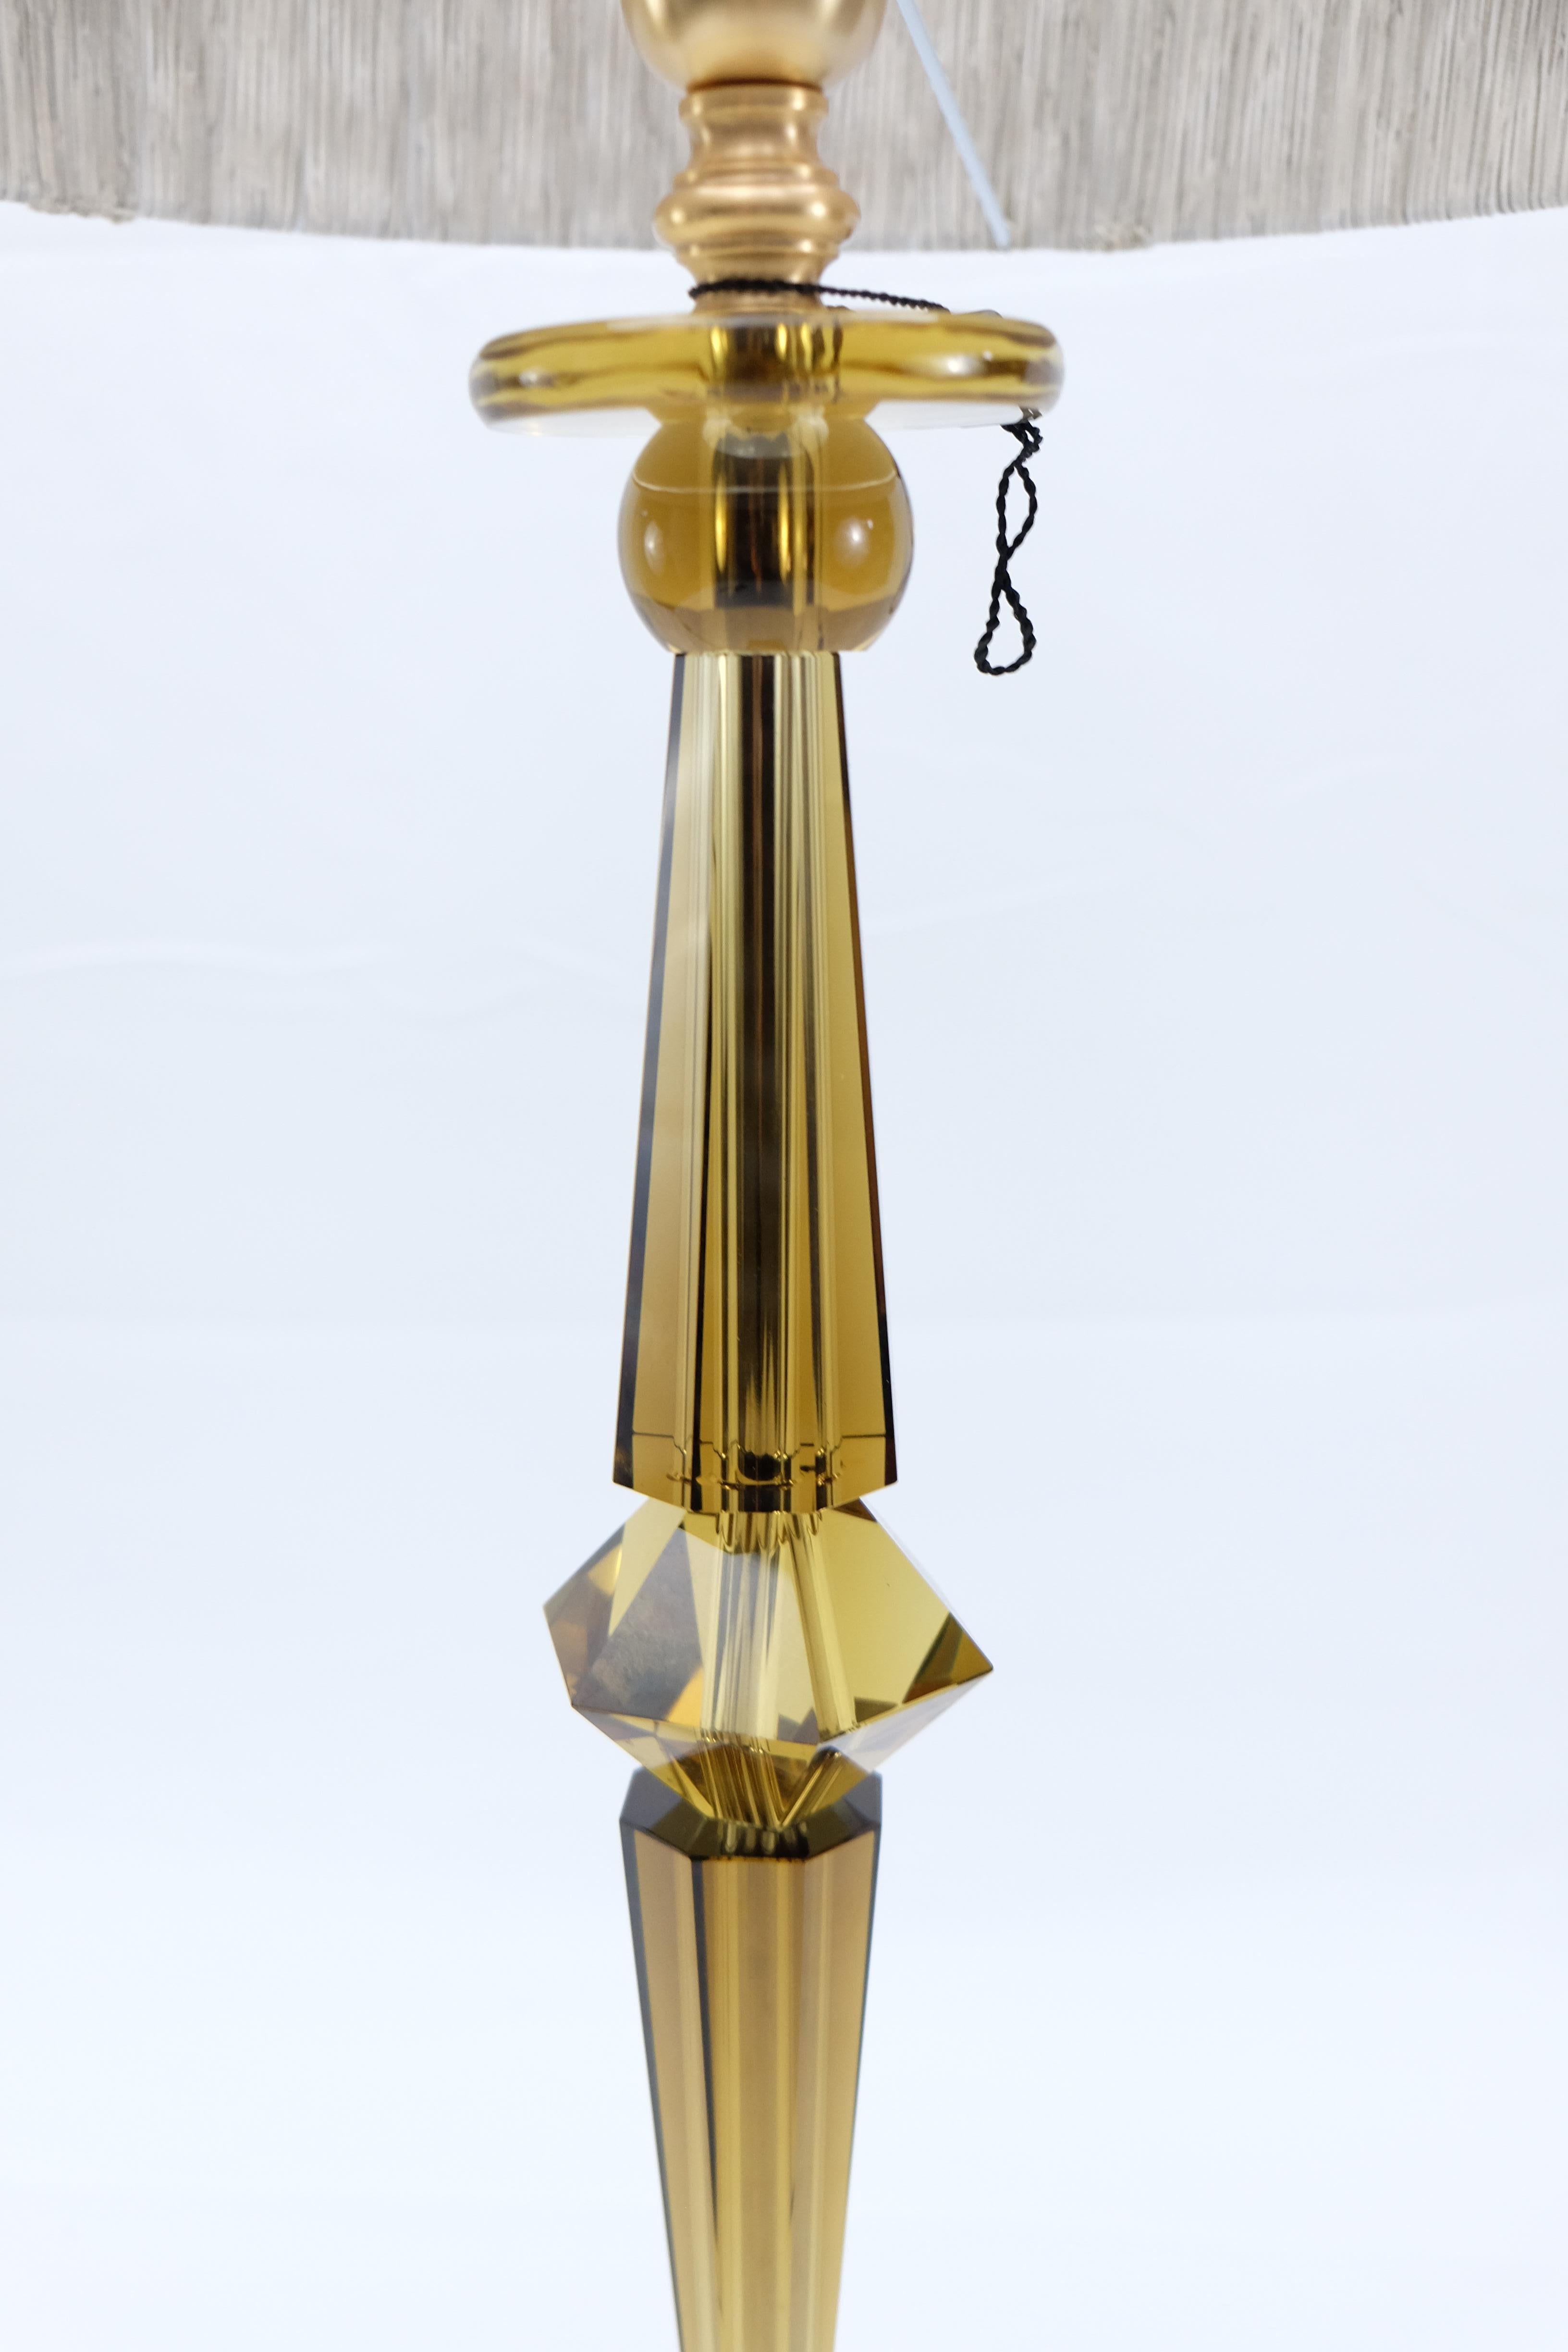 Attilio Amato for Laudarte Srl Prisma Big Table Lamp, Pair Available For Sale 6